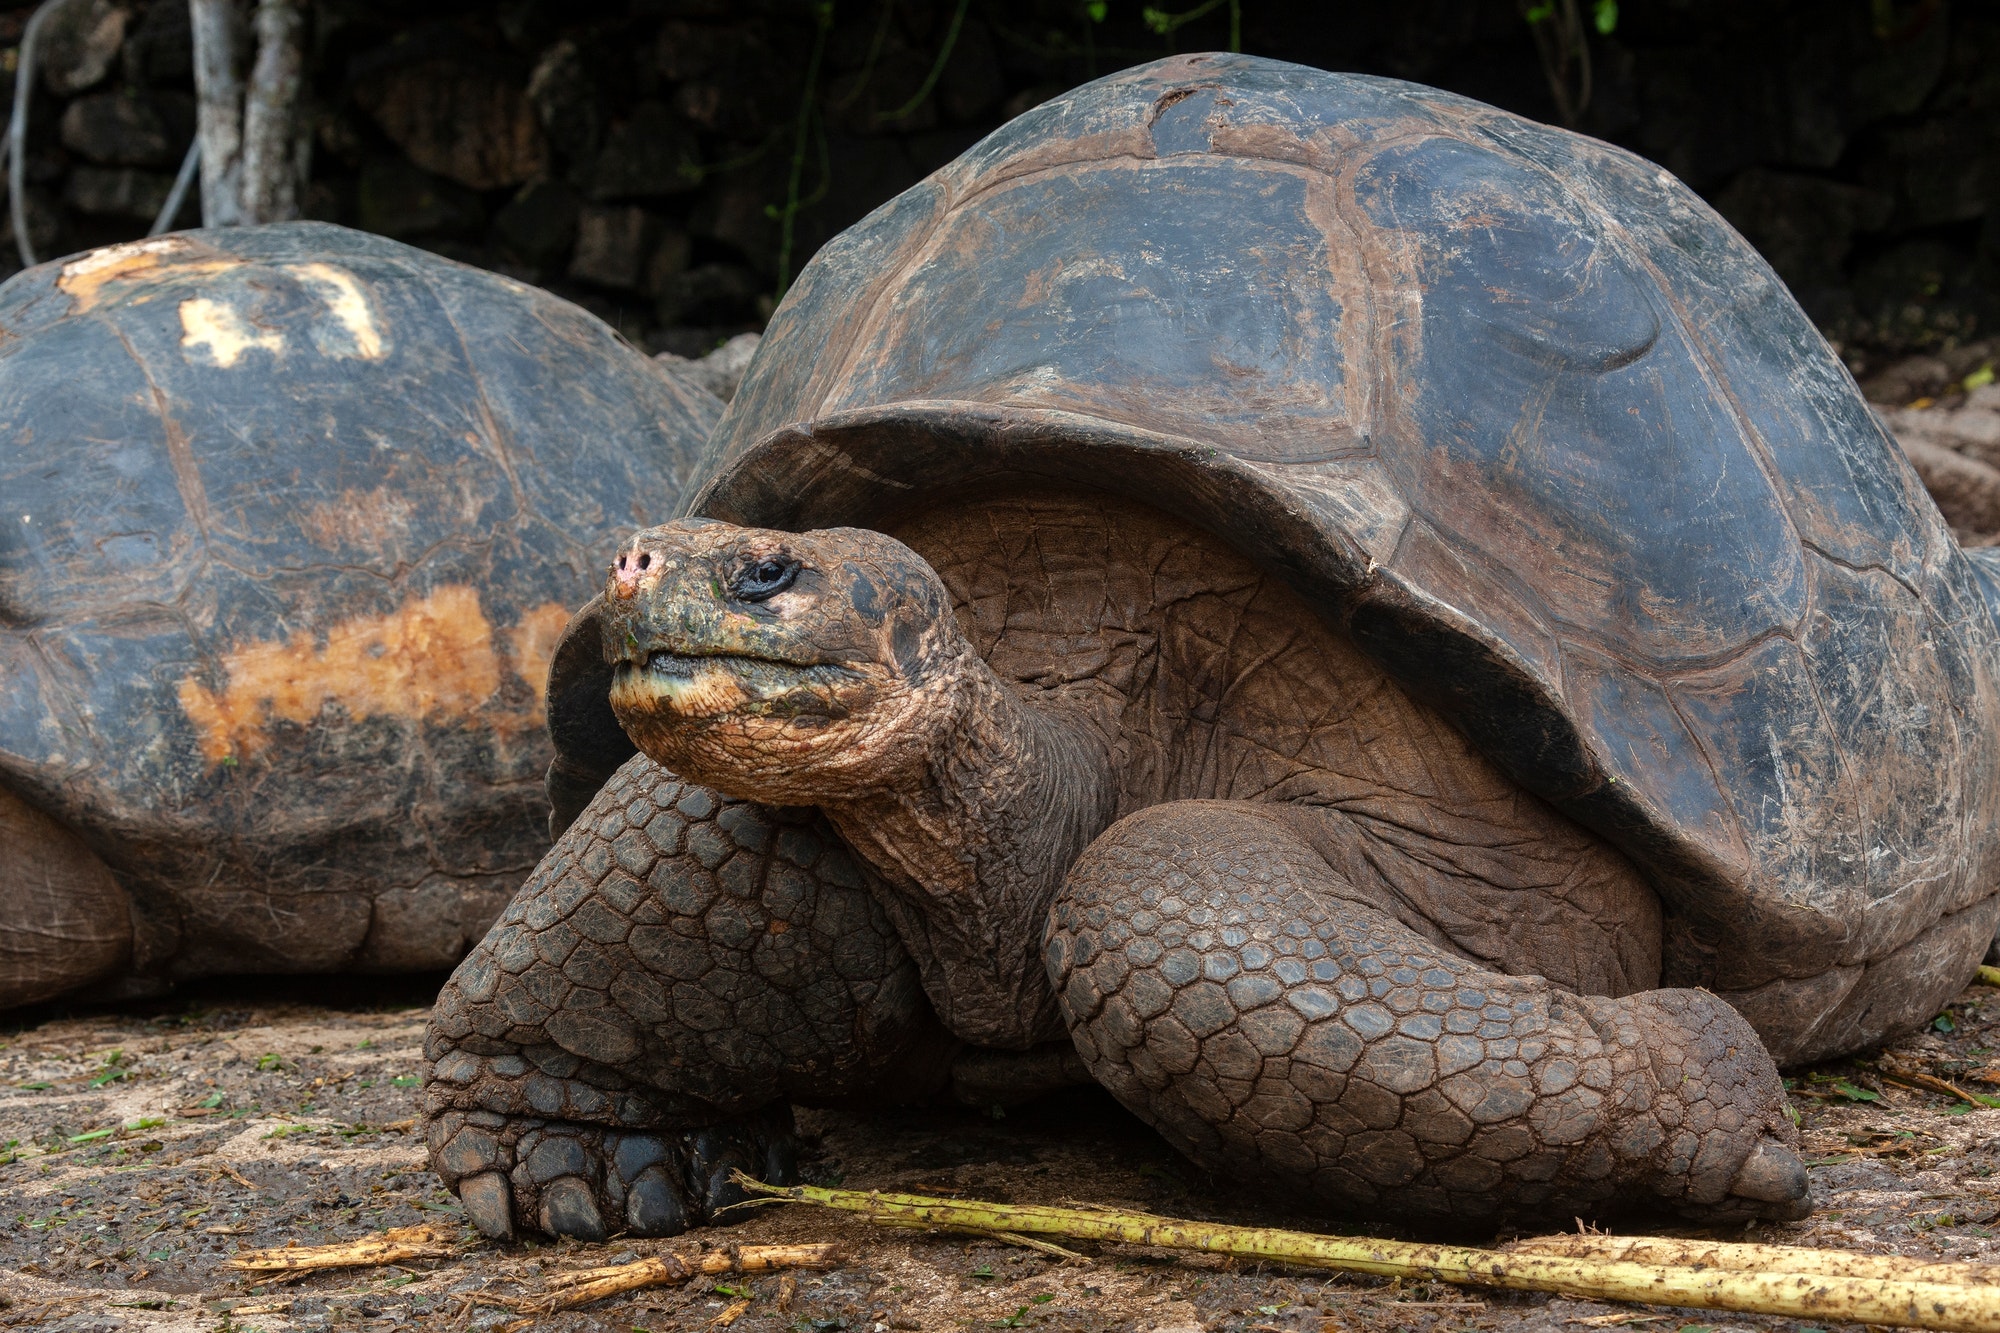 Giant Galapagos Tortoise - Santa Cruz Island in the Galapagos Islands